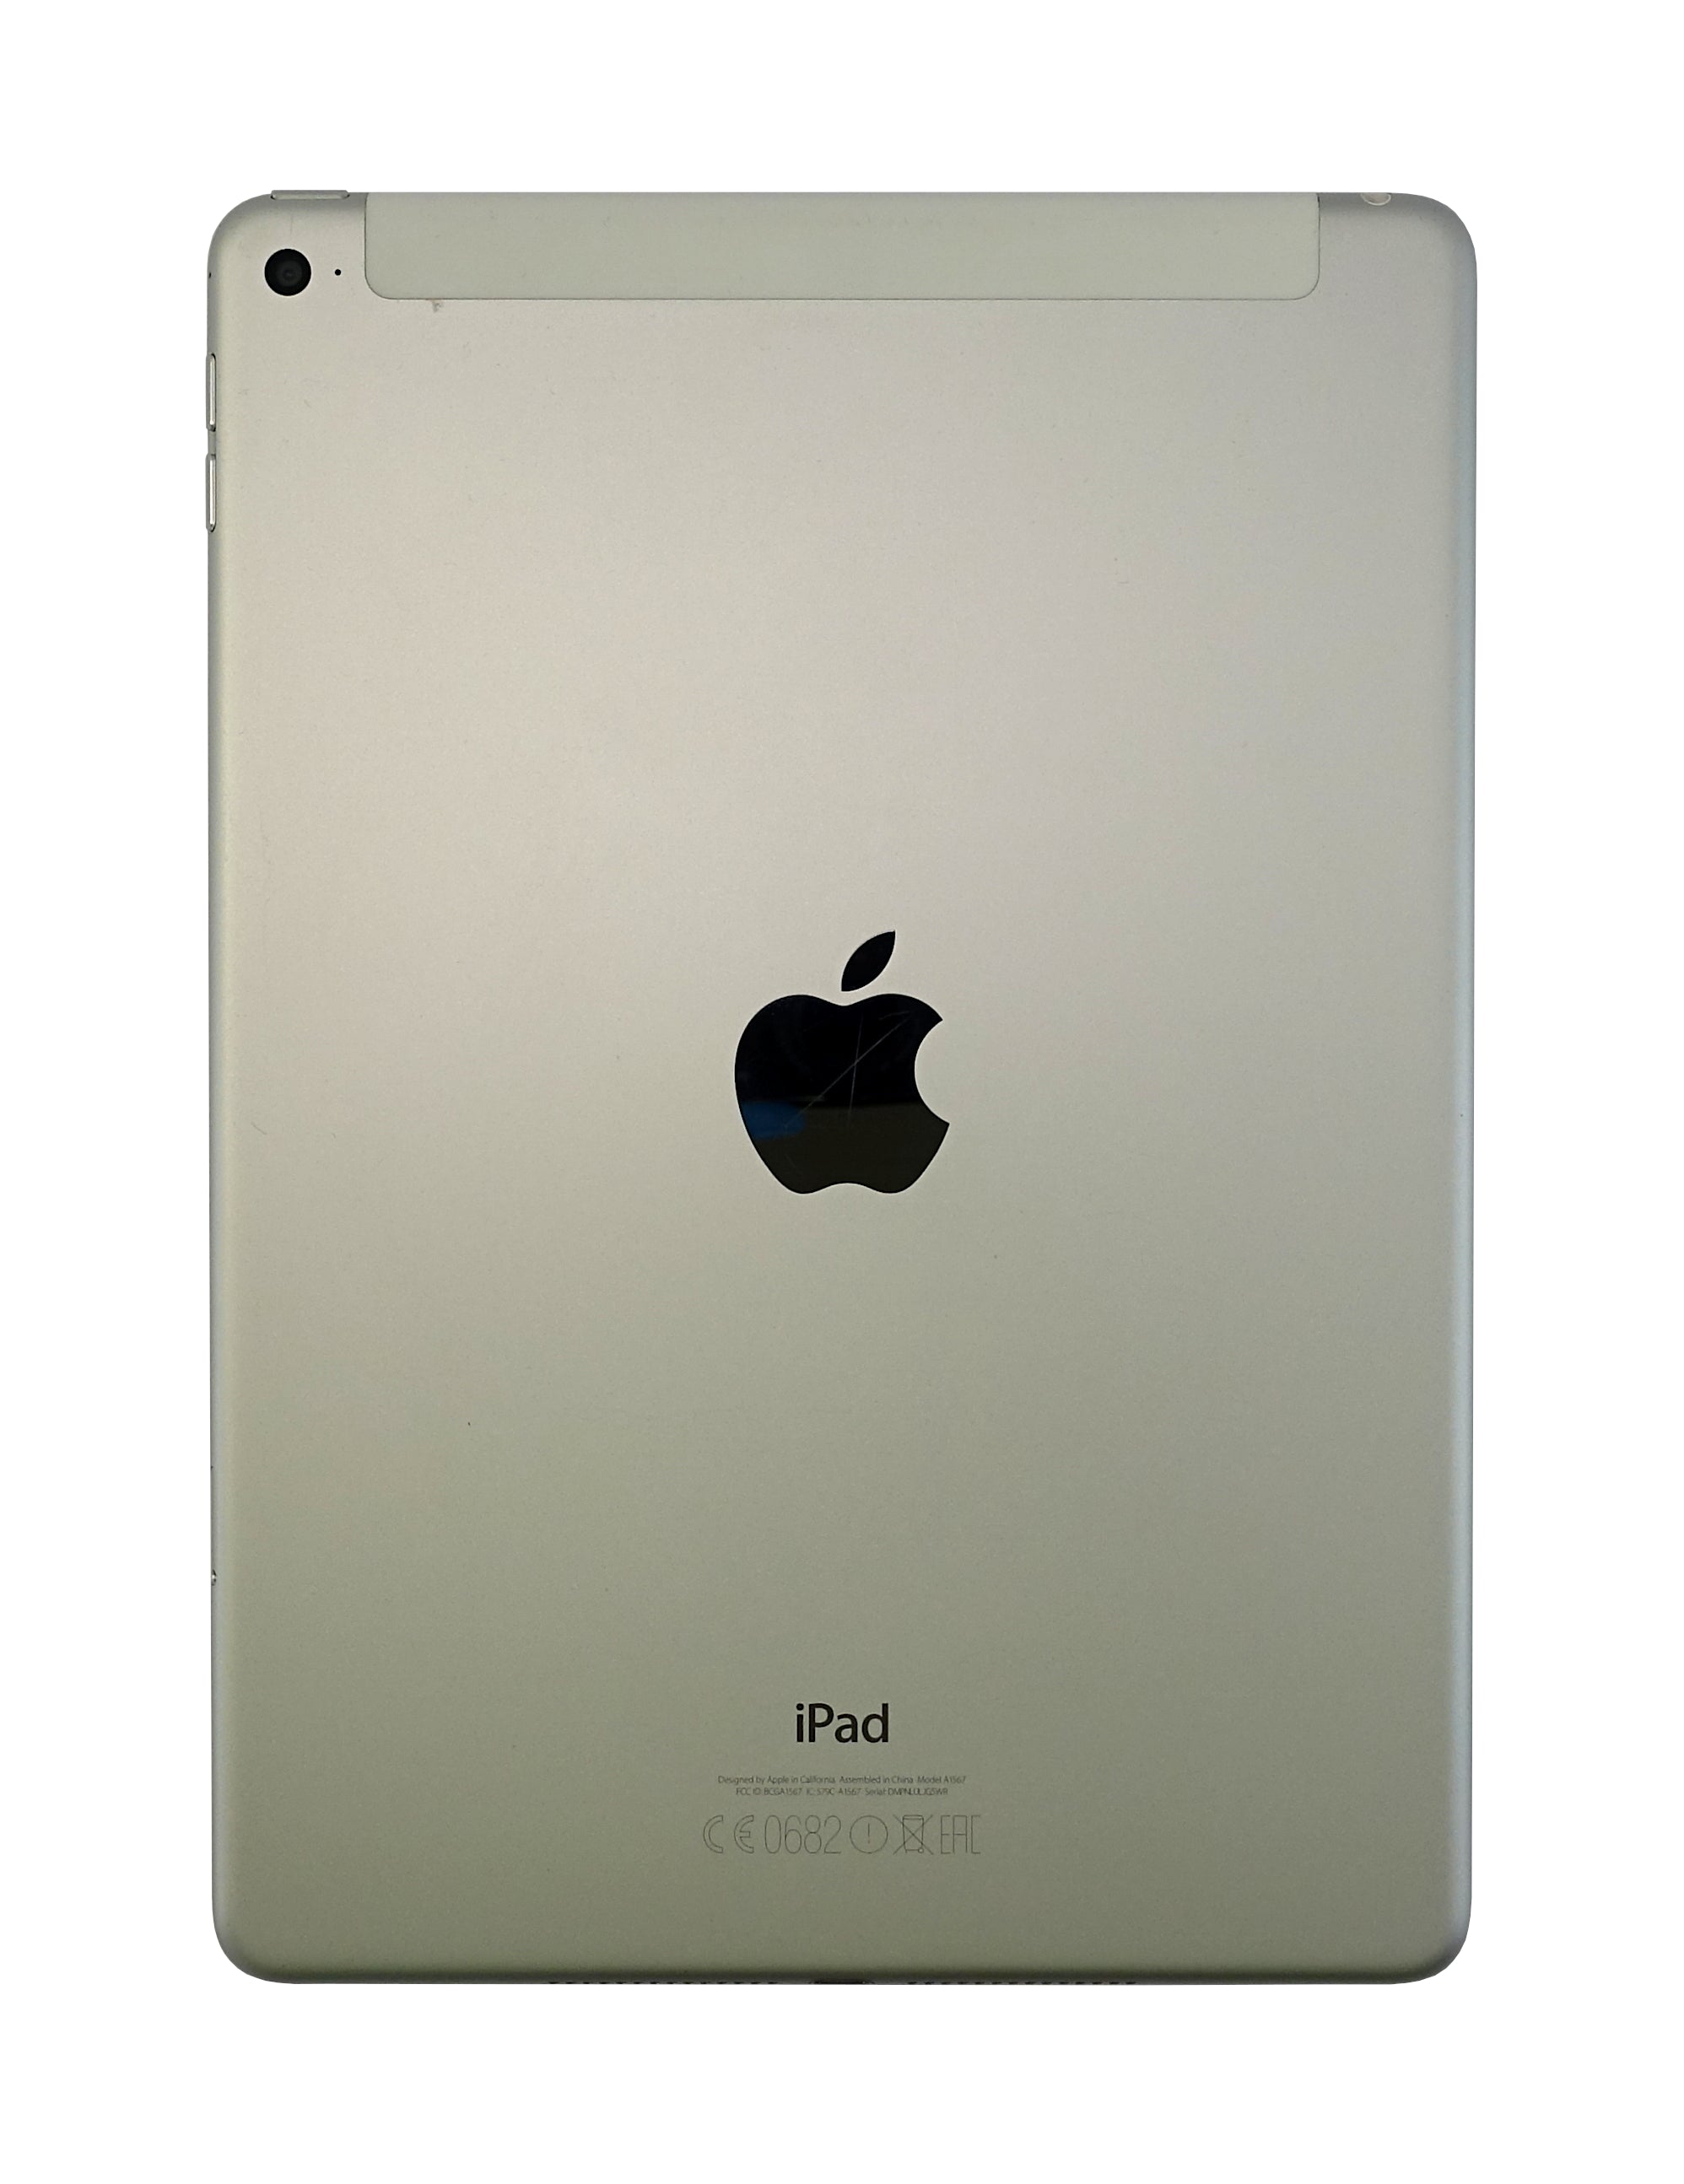 Apple iPad Air 2 Tablet, 16GB, WiFi + GSM, Silver, A1567